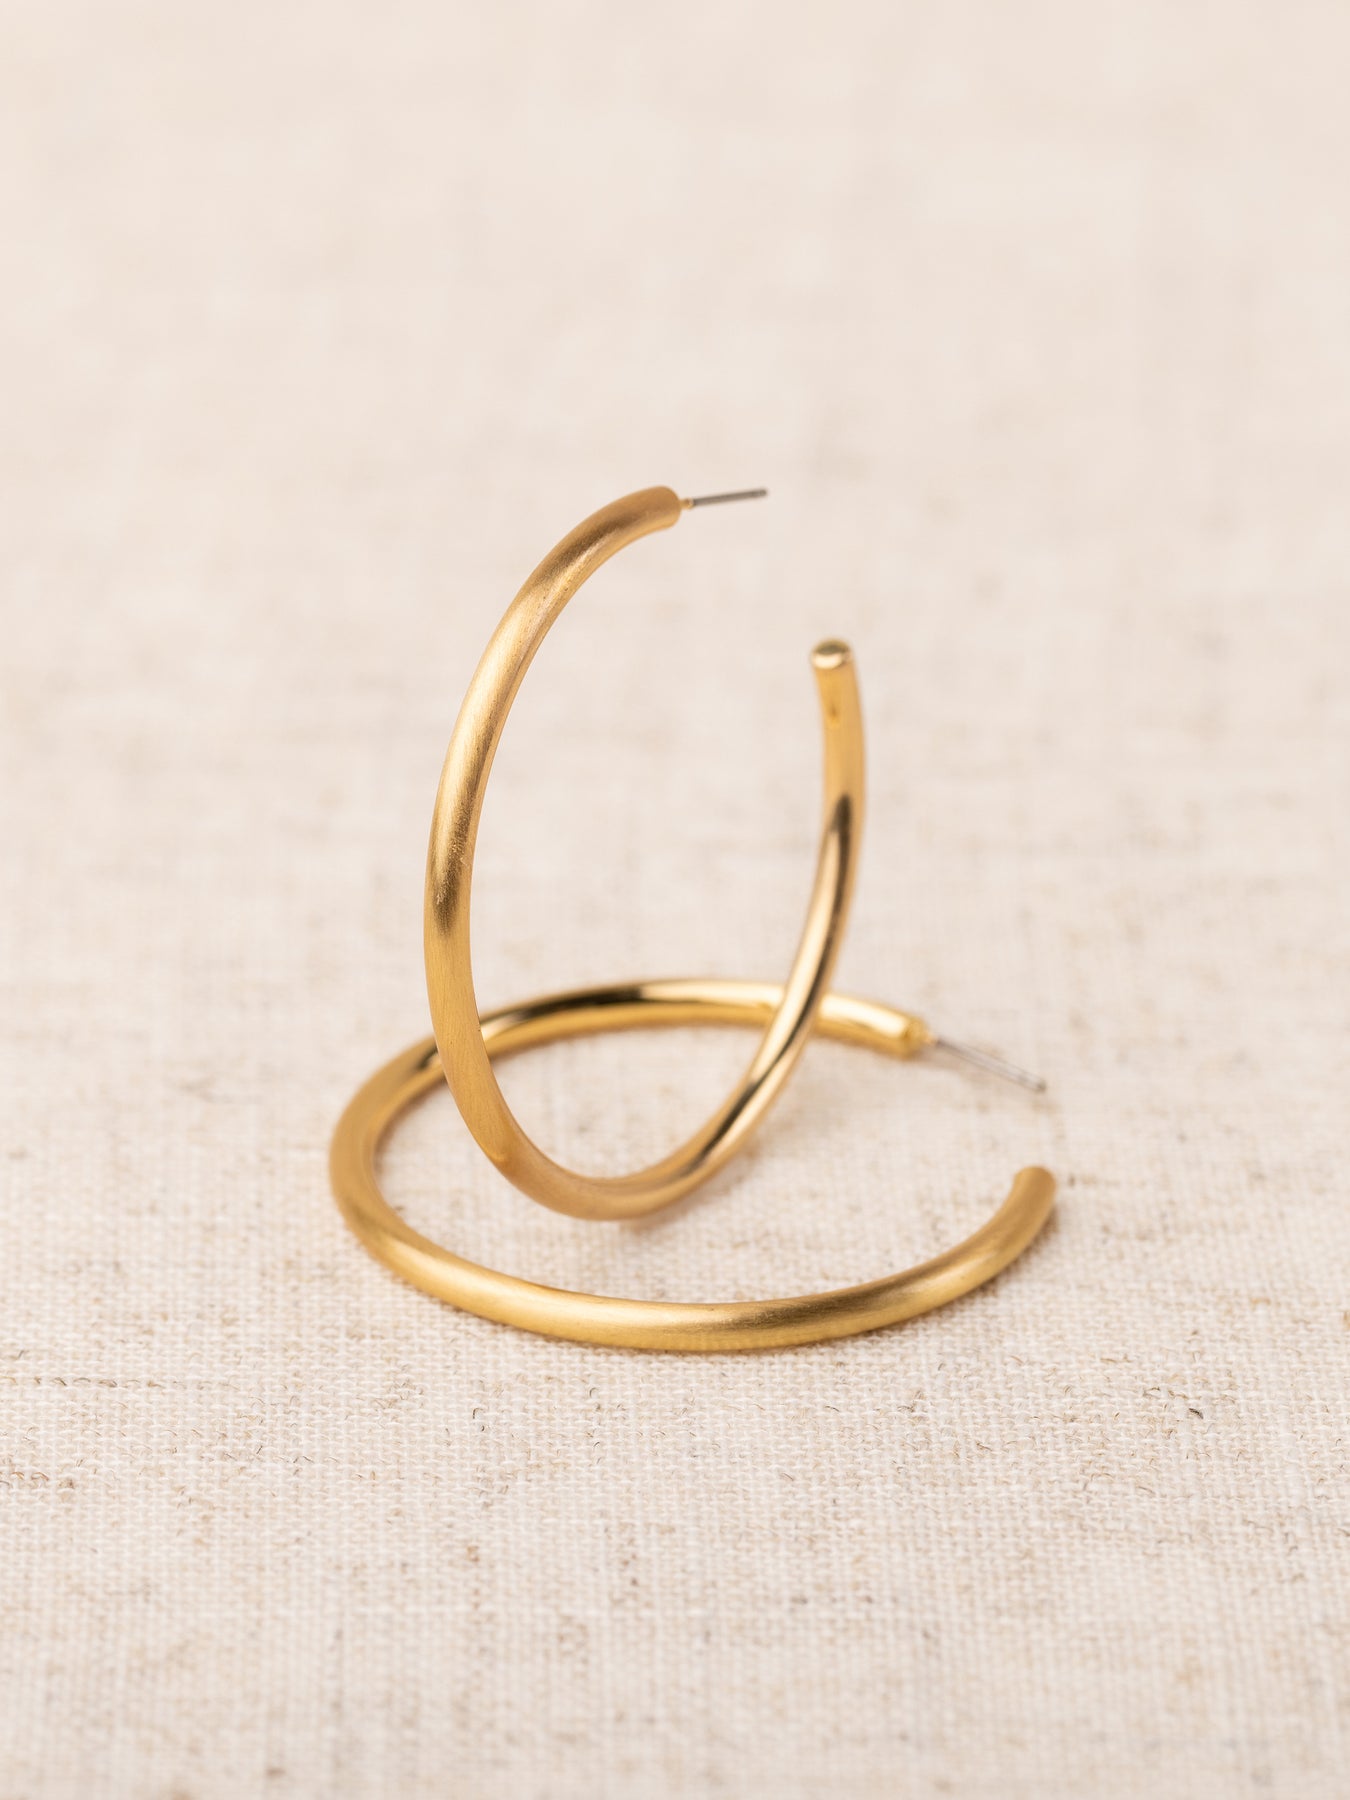 Michelle McDowell - Estonia Earrings - Brushed Gold